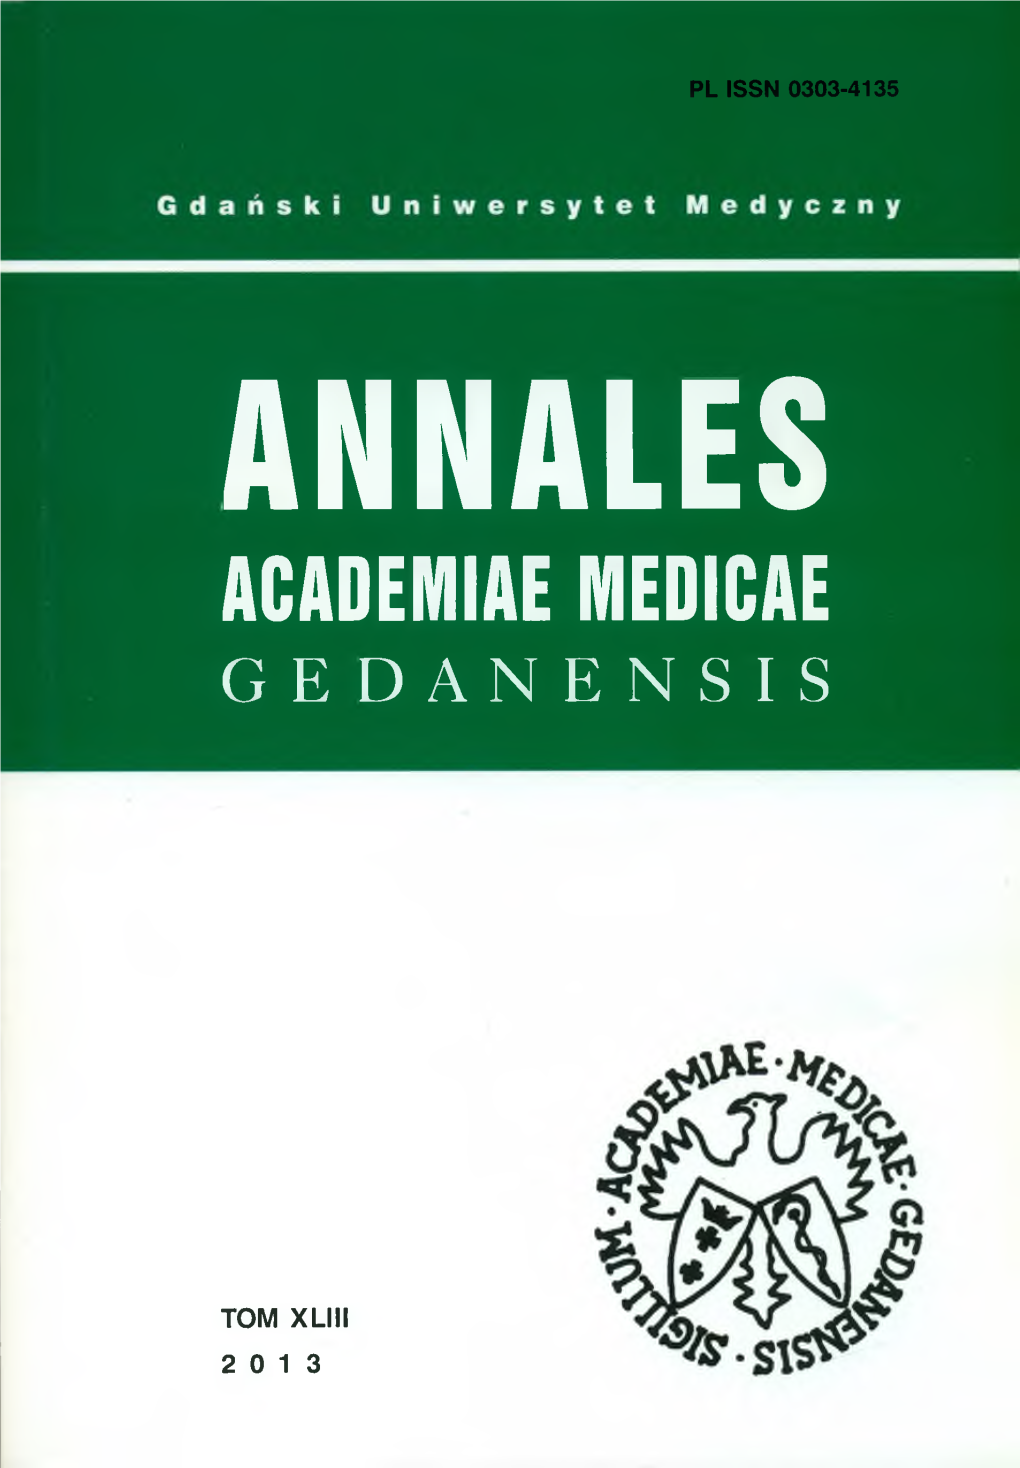 Academiae Medicae Gedanensis